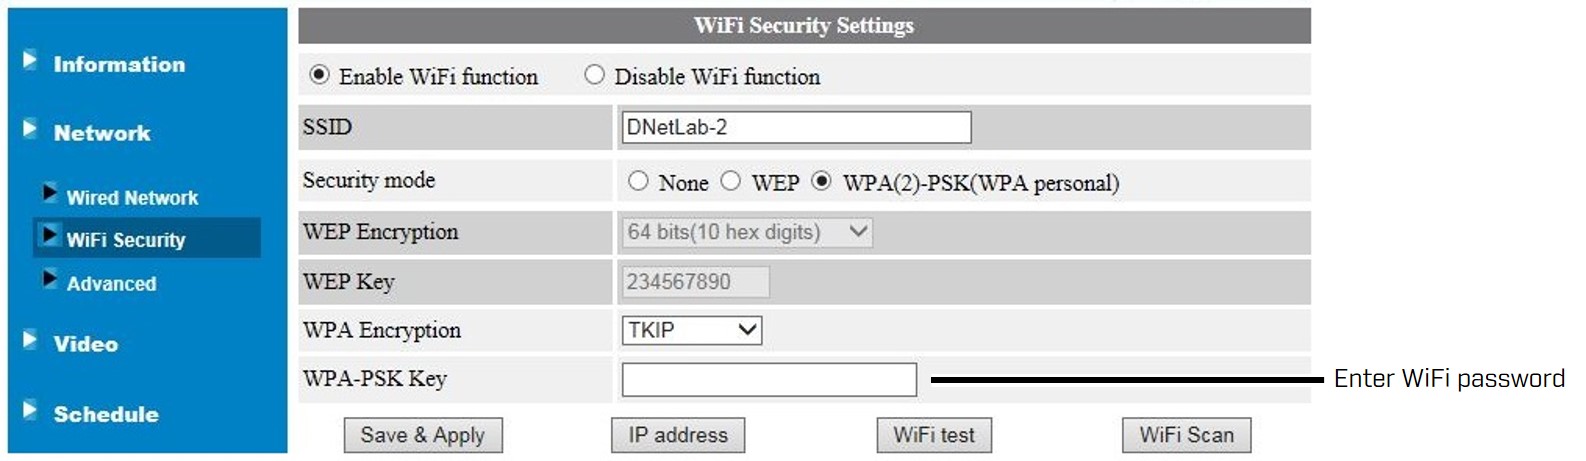 L View Wifi Security Settings Fields